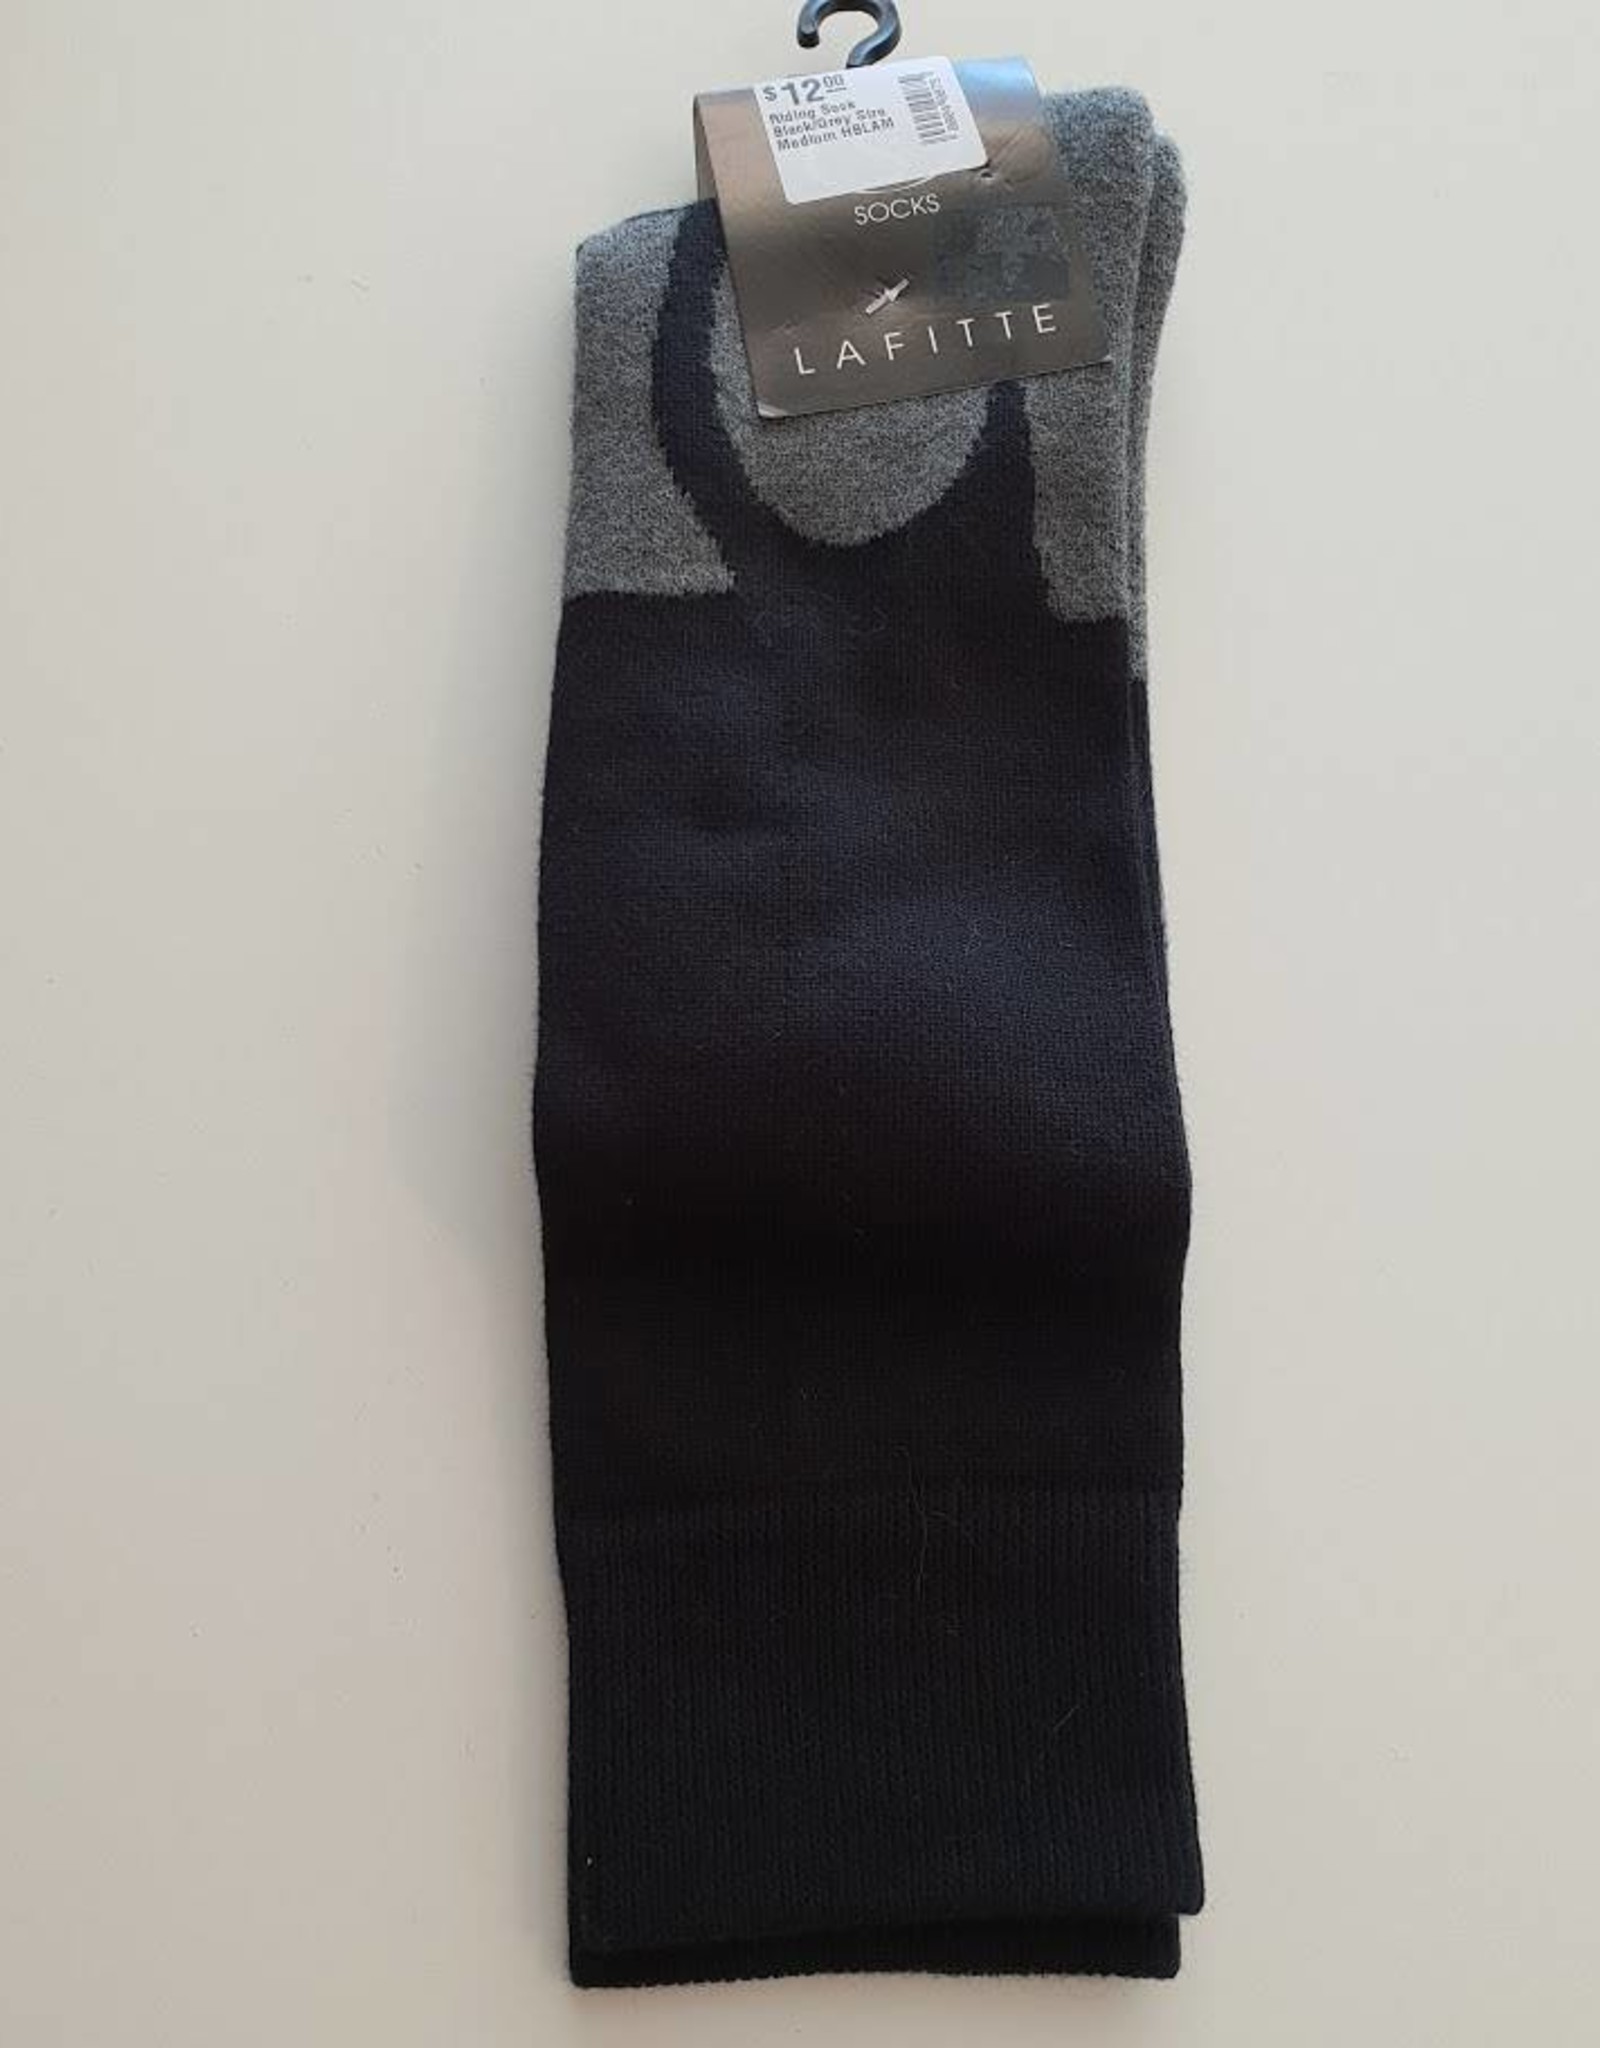 Lafitte Riding Sock - Black/Grey - Size 6-11 Medium